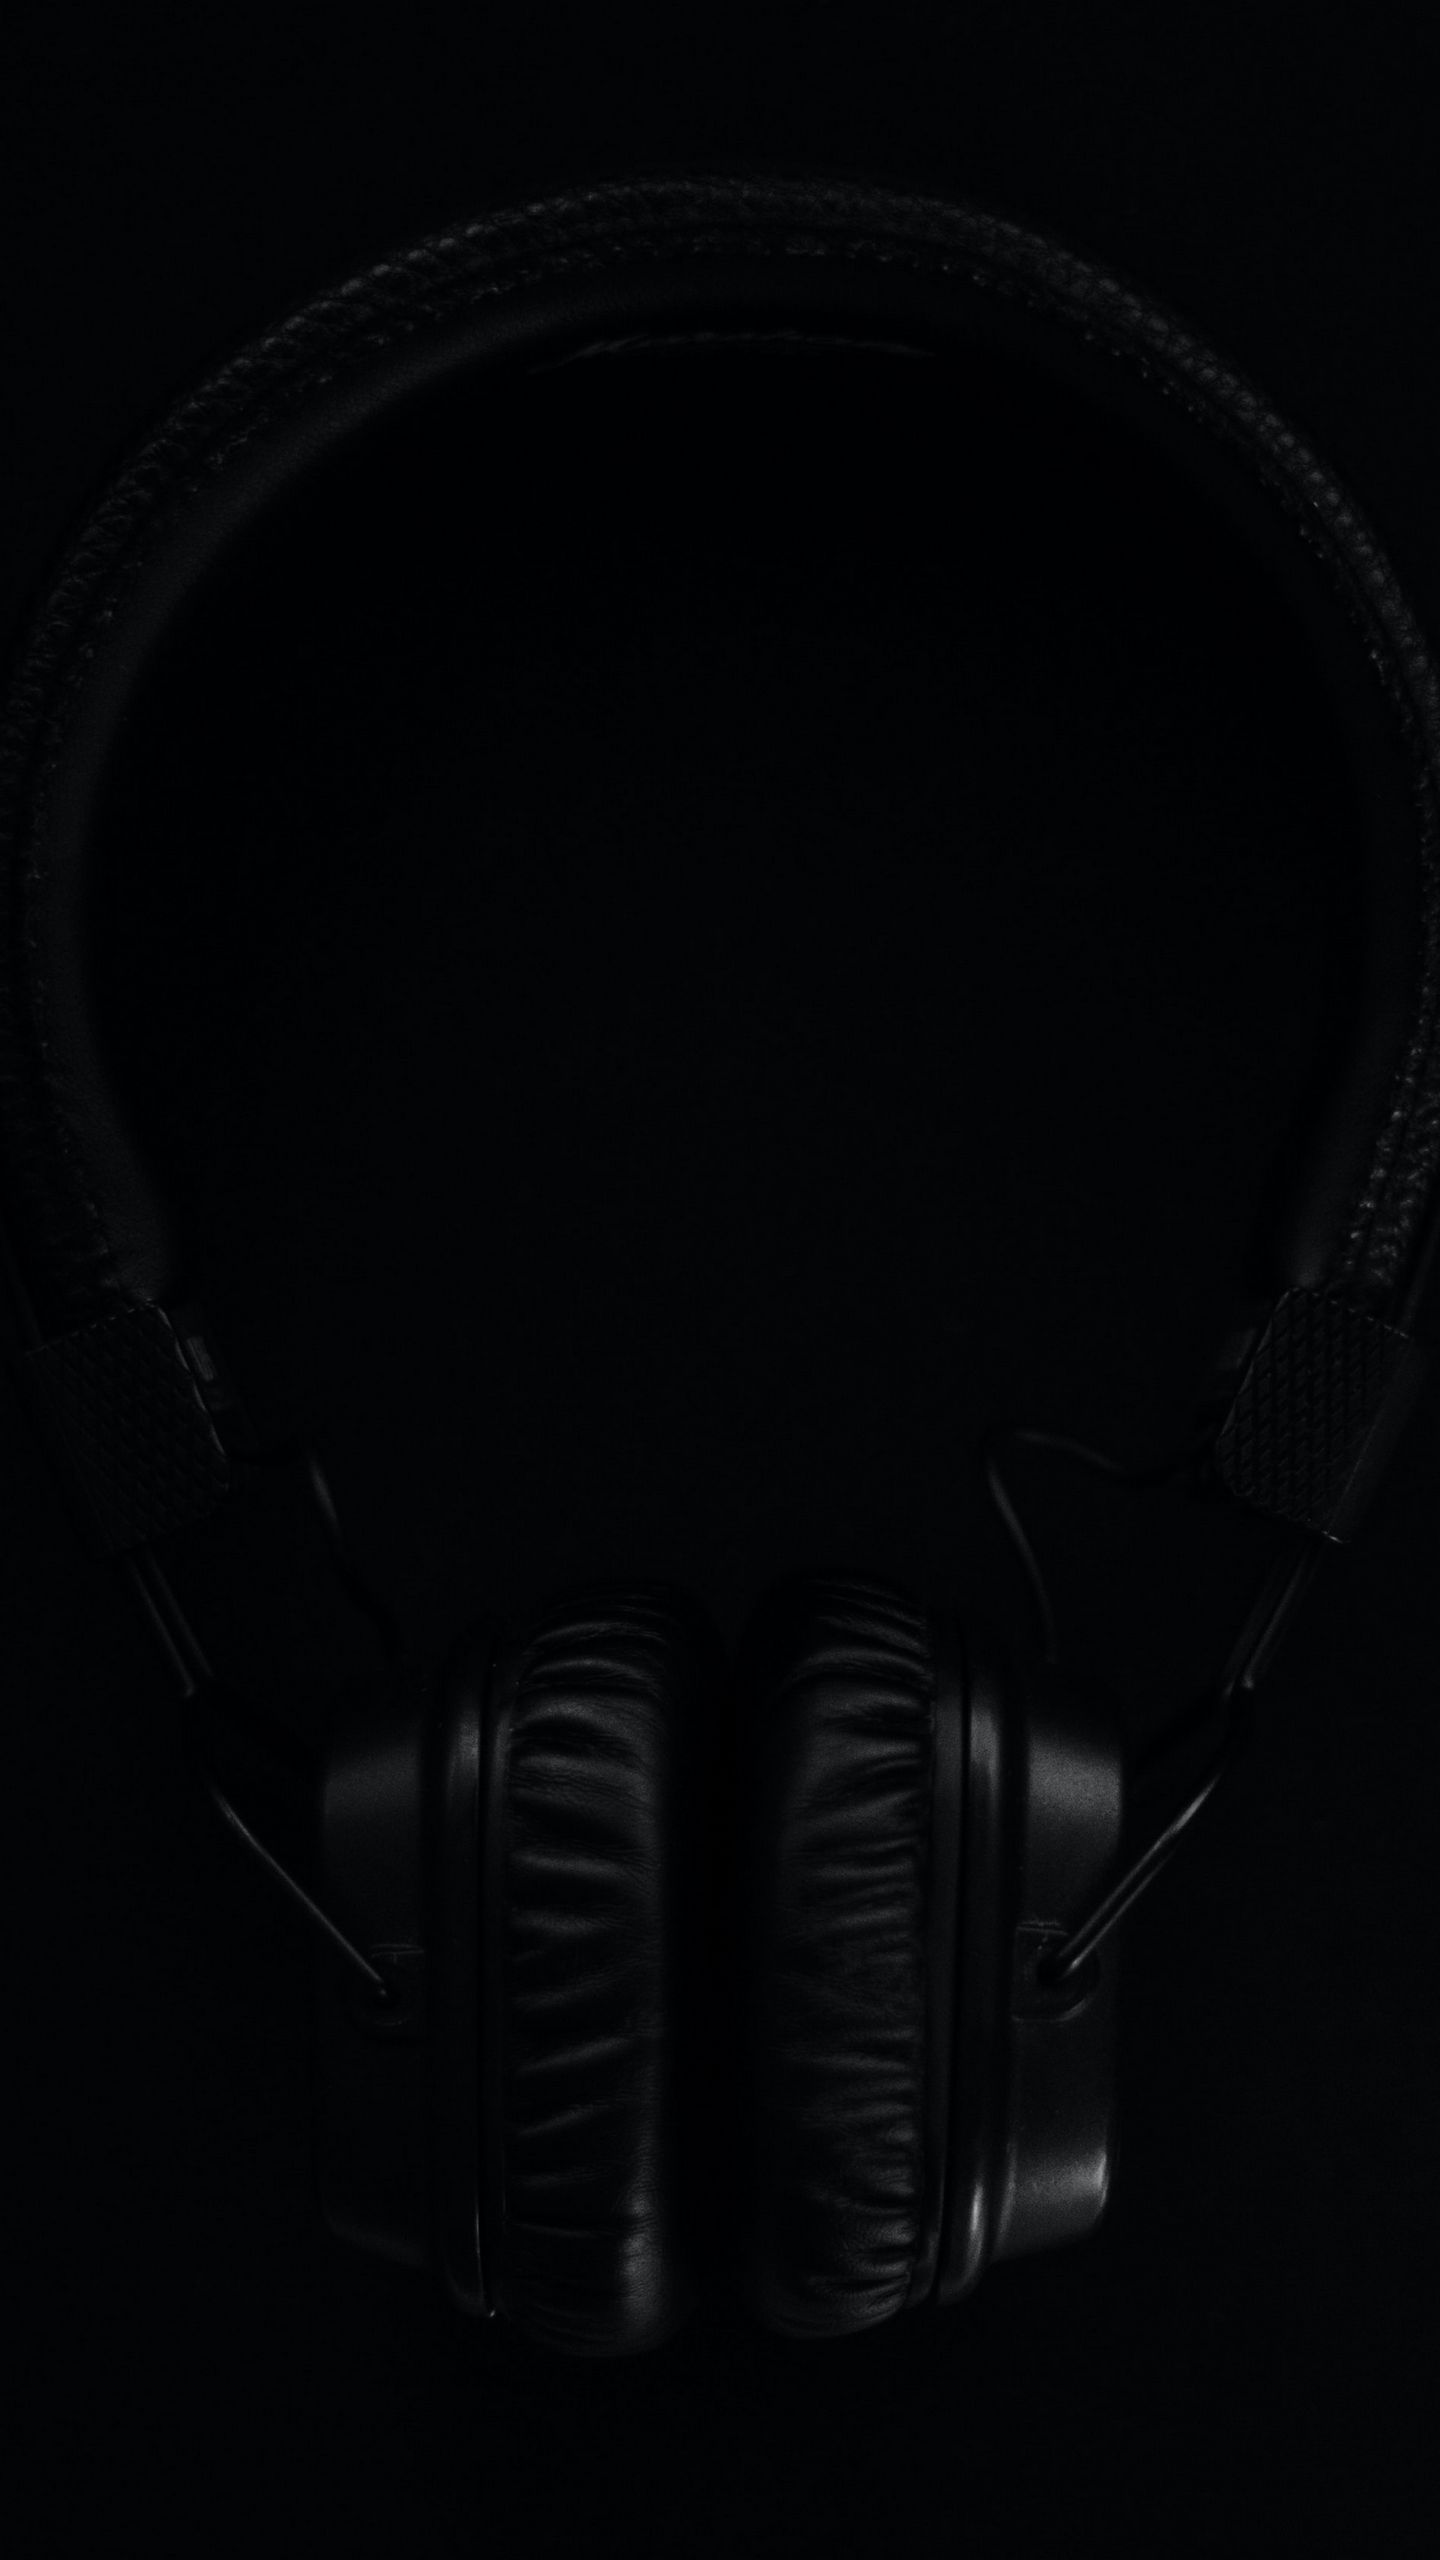 Download wallpaper 1440x2560 headphones, black, dark, music qhd samsung  galaxy s6, s7, edge, note, lg g4 hd background